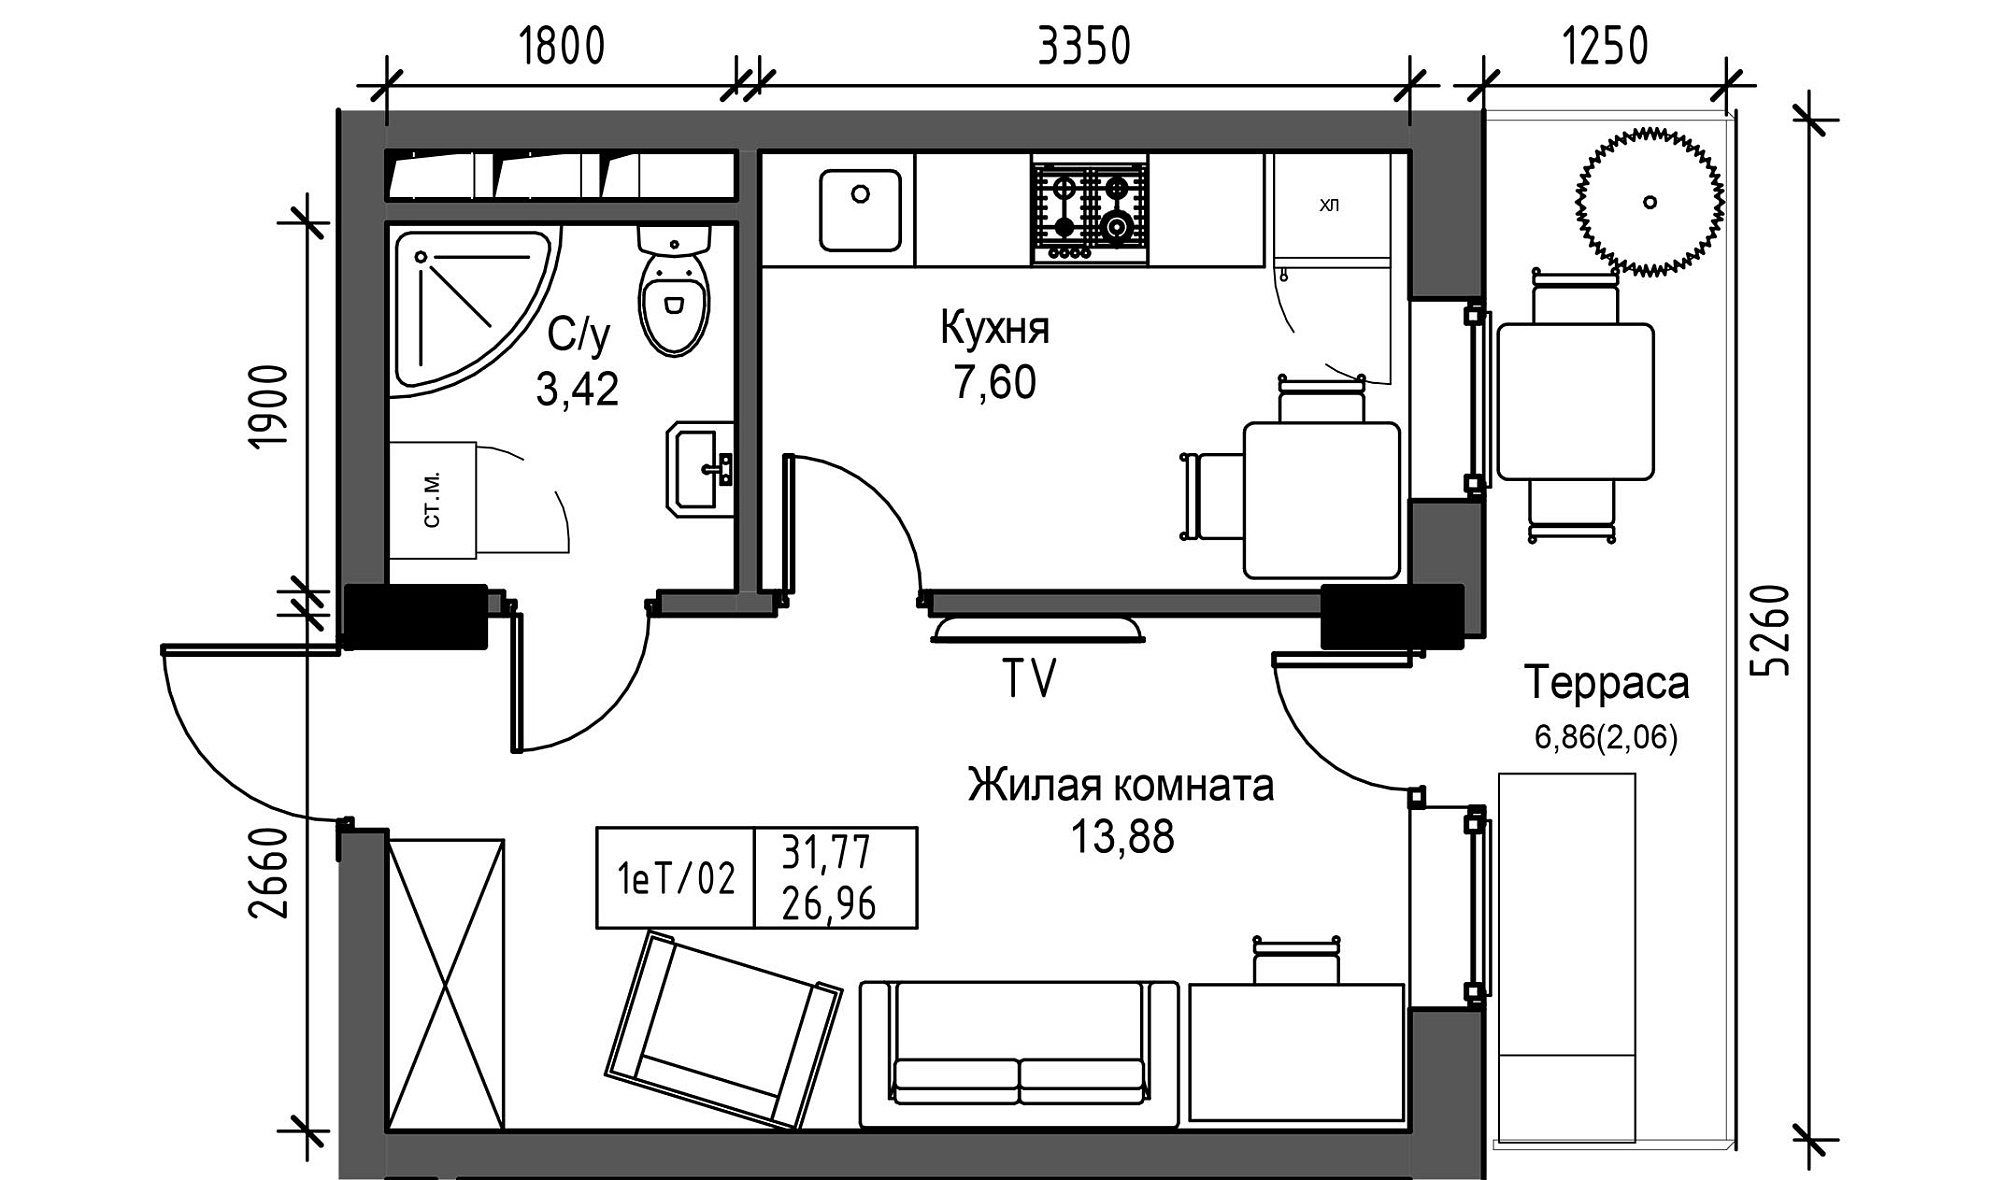 Planning 1-rm flats area 26.96m2, UM-003-05/0037.